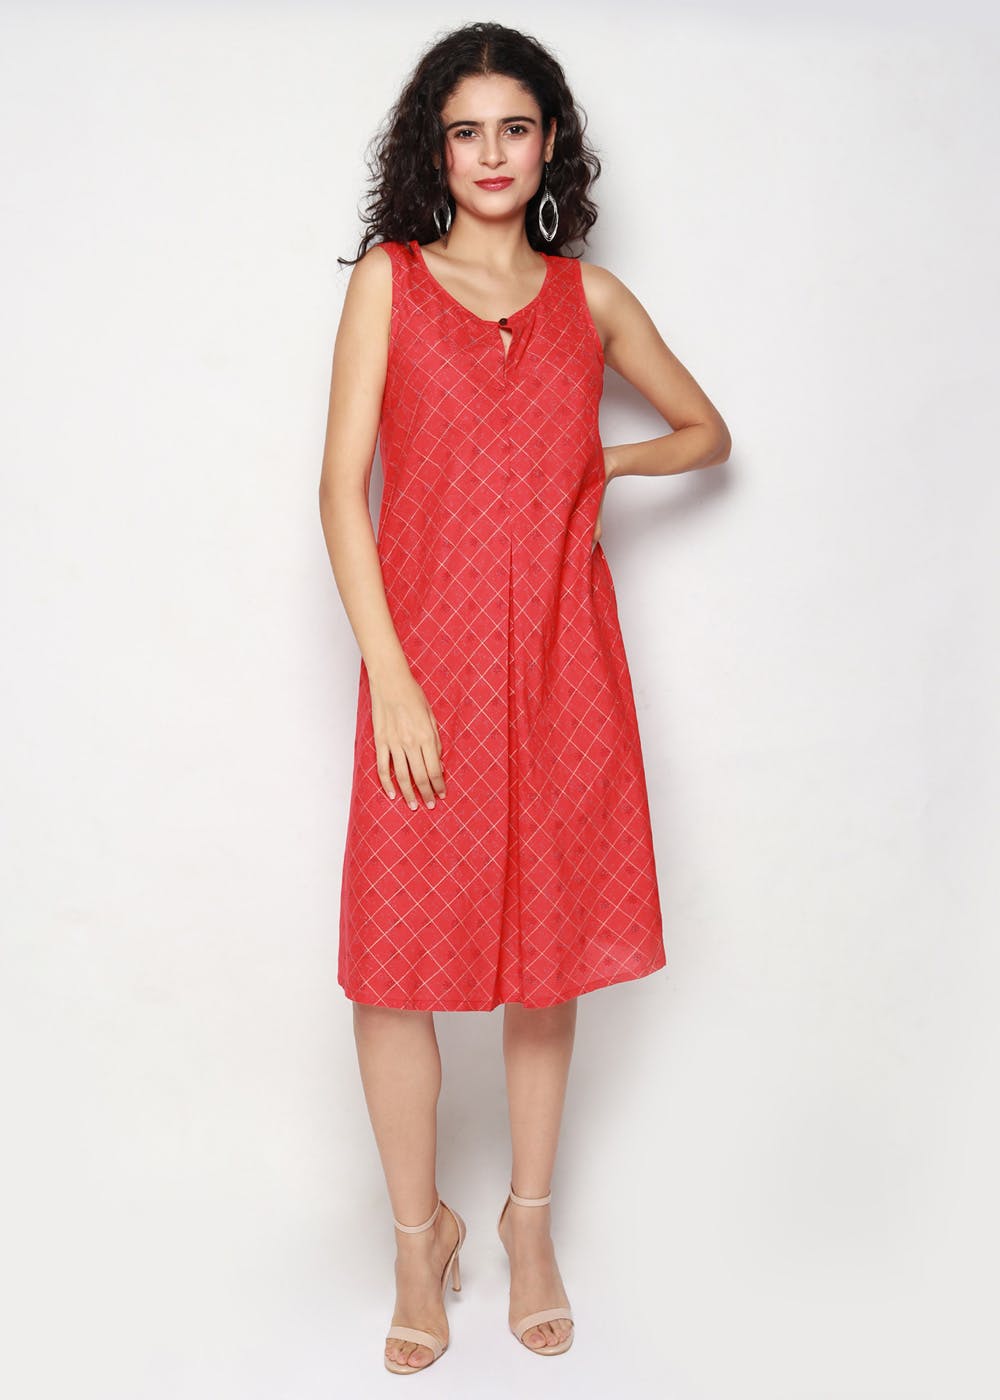 Buy Rare Red A-Line Dress for Women Online @ Tata CLiQ